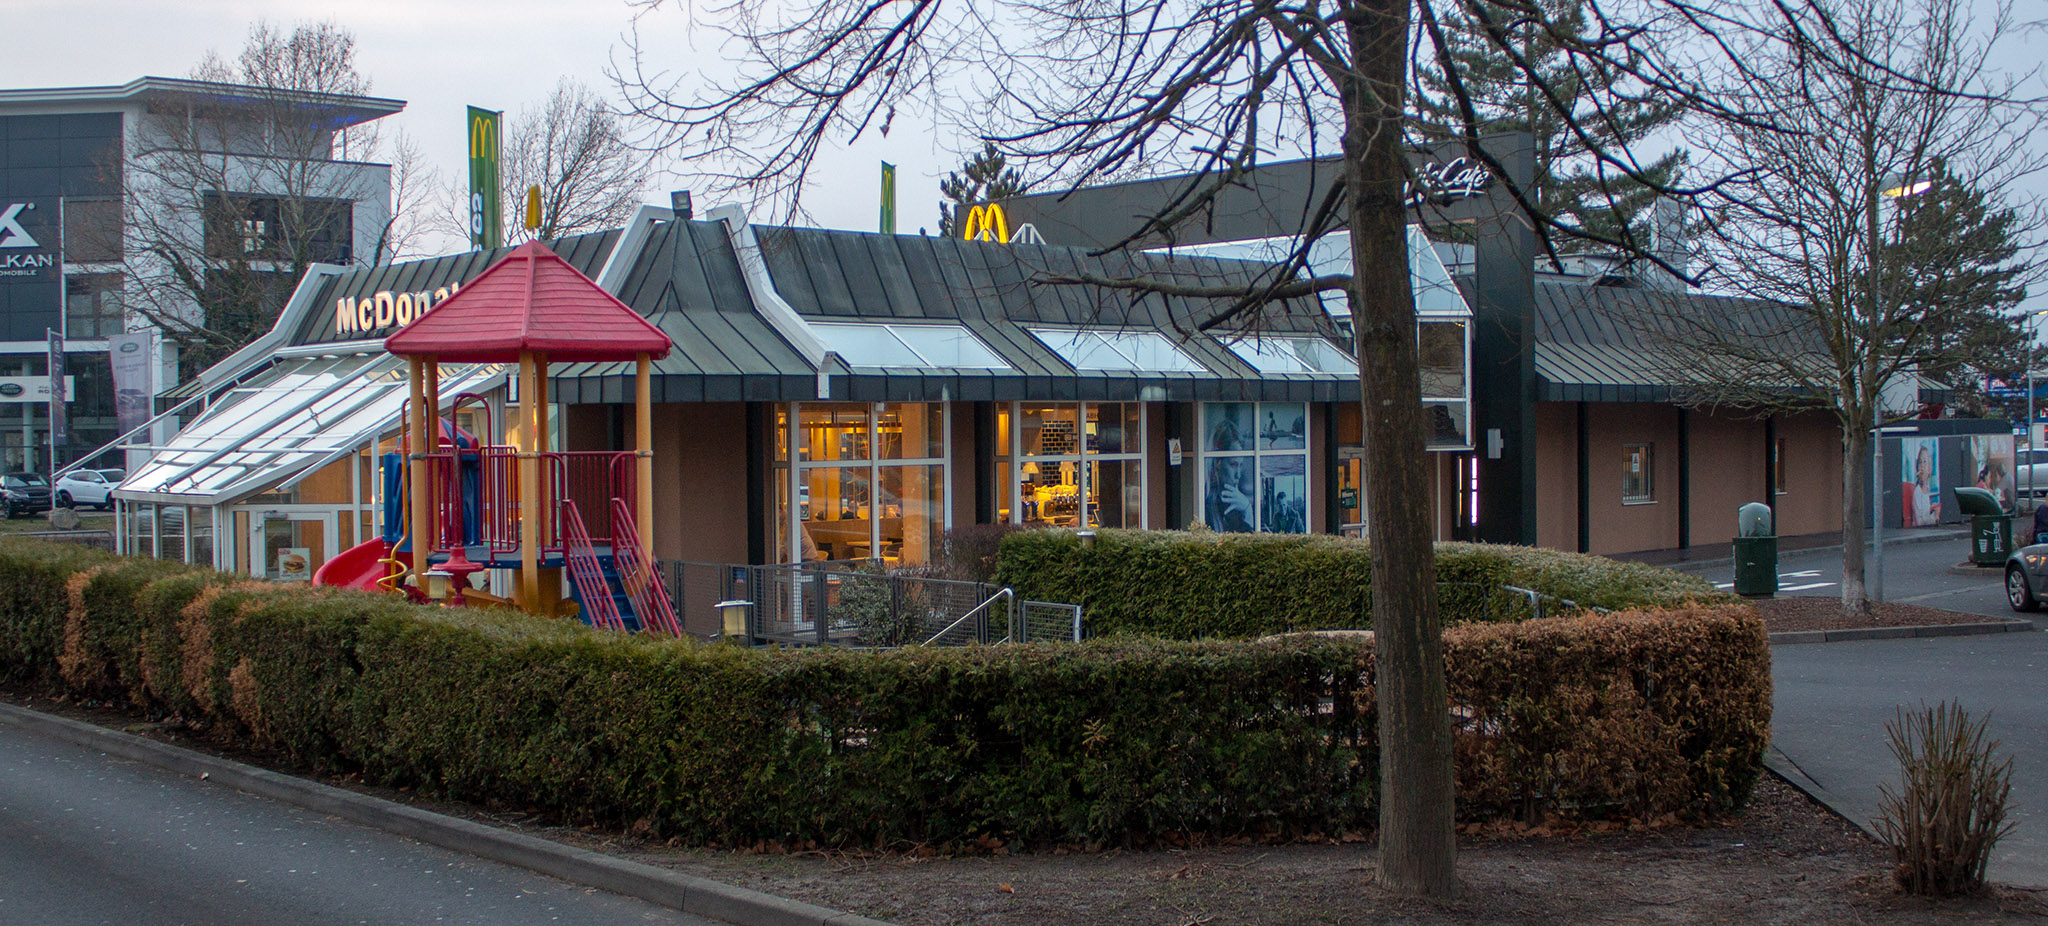 Das McDonald’s-Restaurant in Aschaffenburg (Berliner Allee)